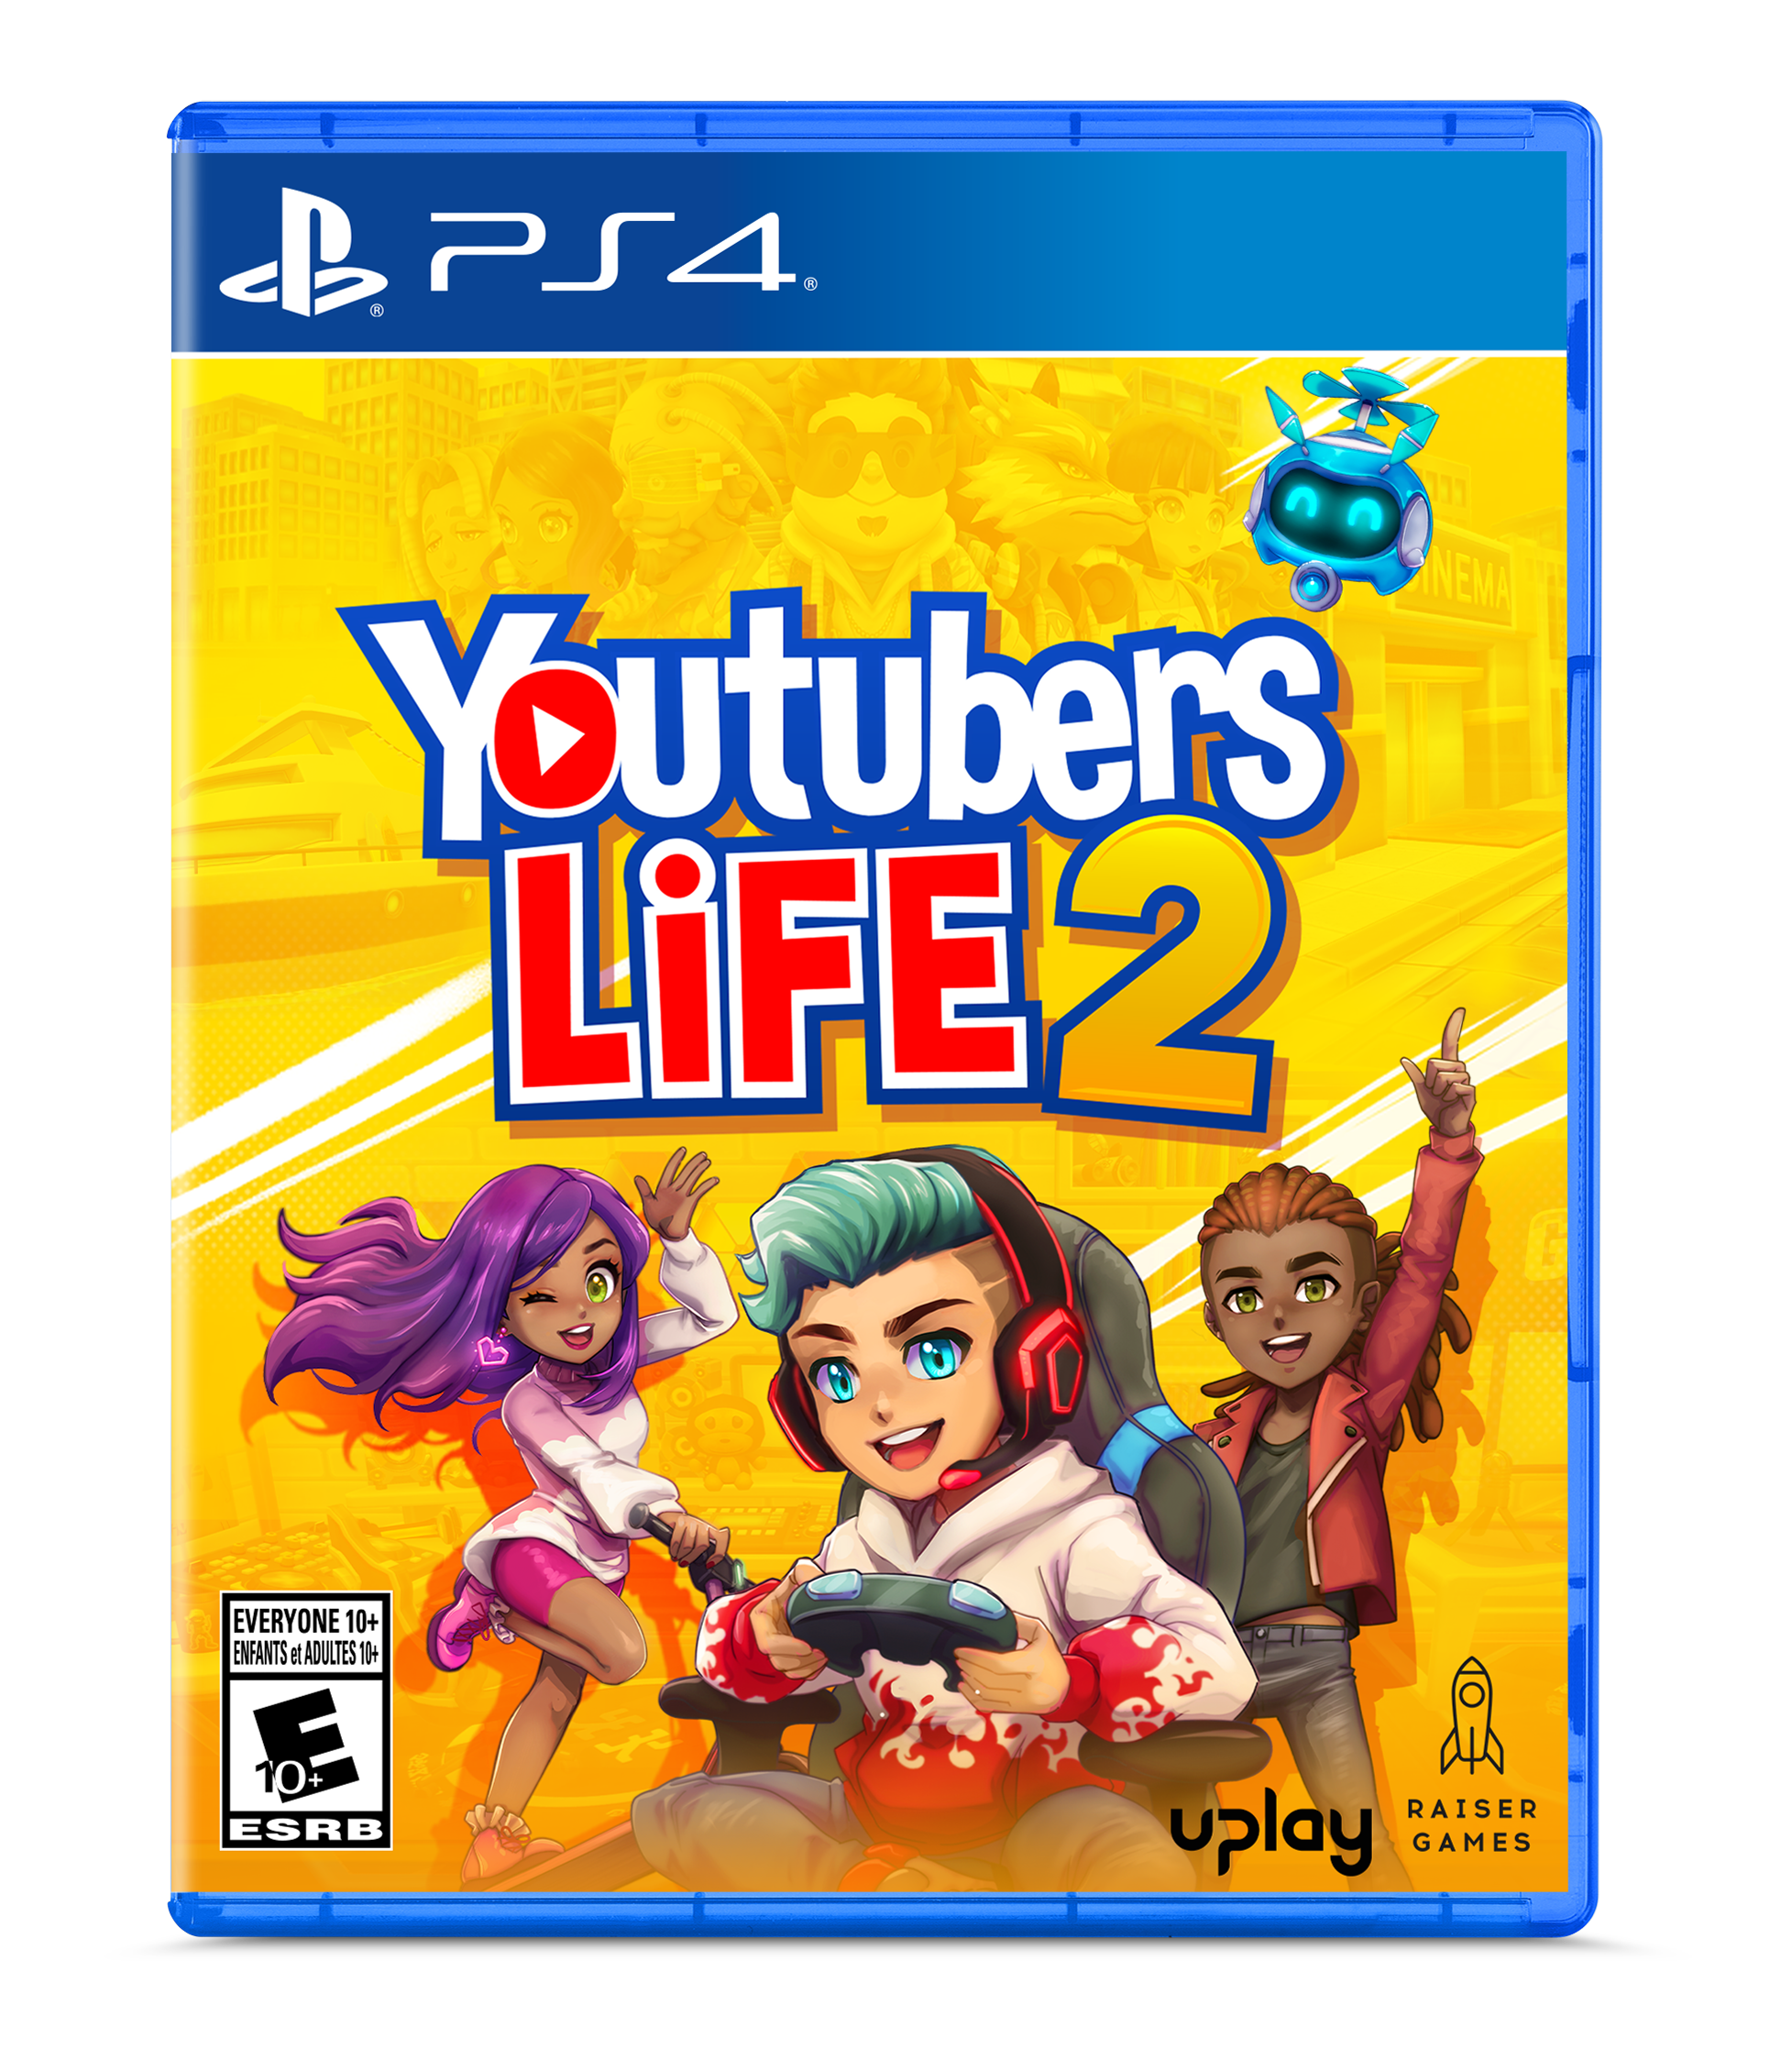 rs Life 2 PlayStation 4 Indie Game Review - Geeky Hobbies